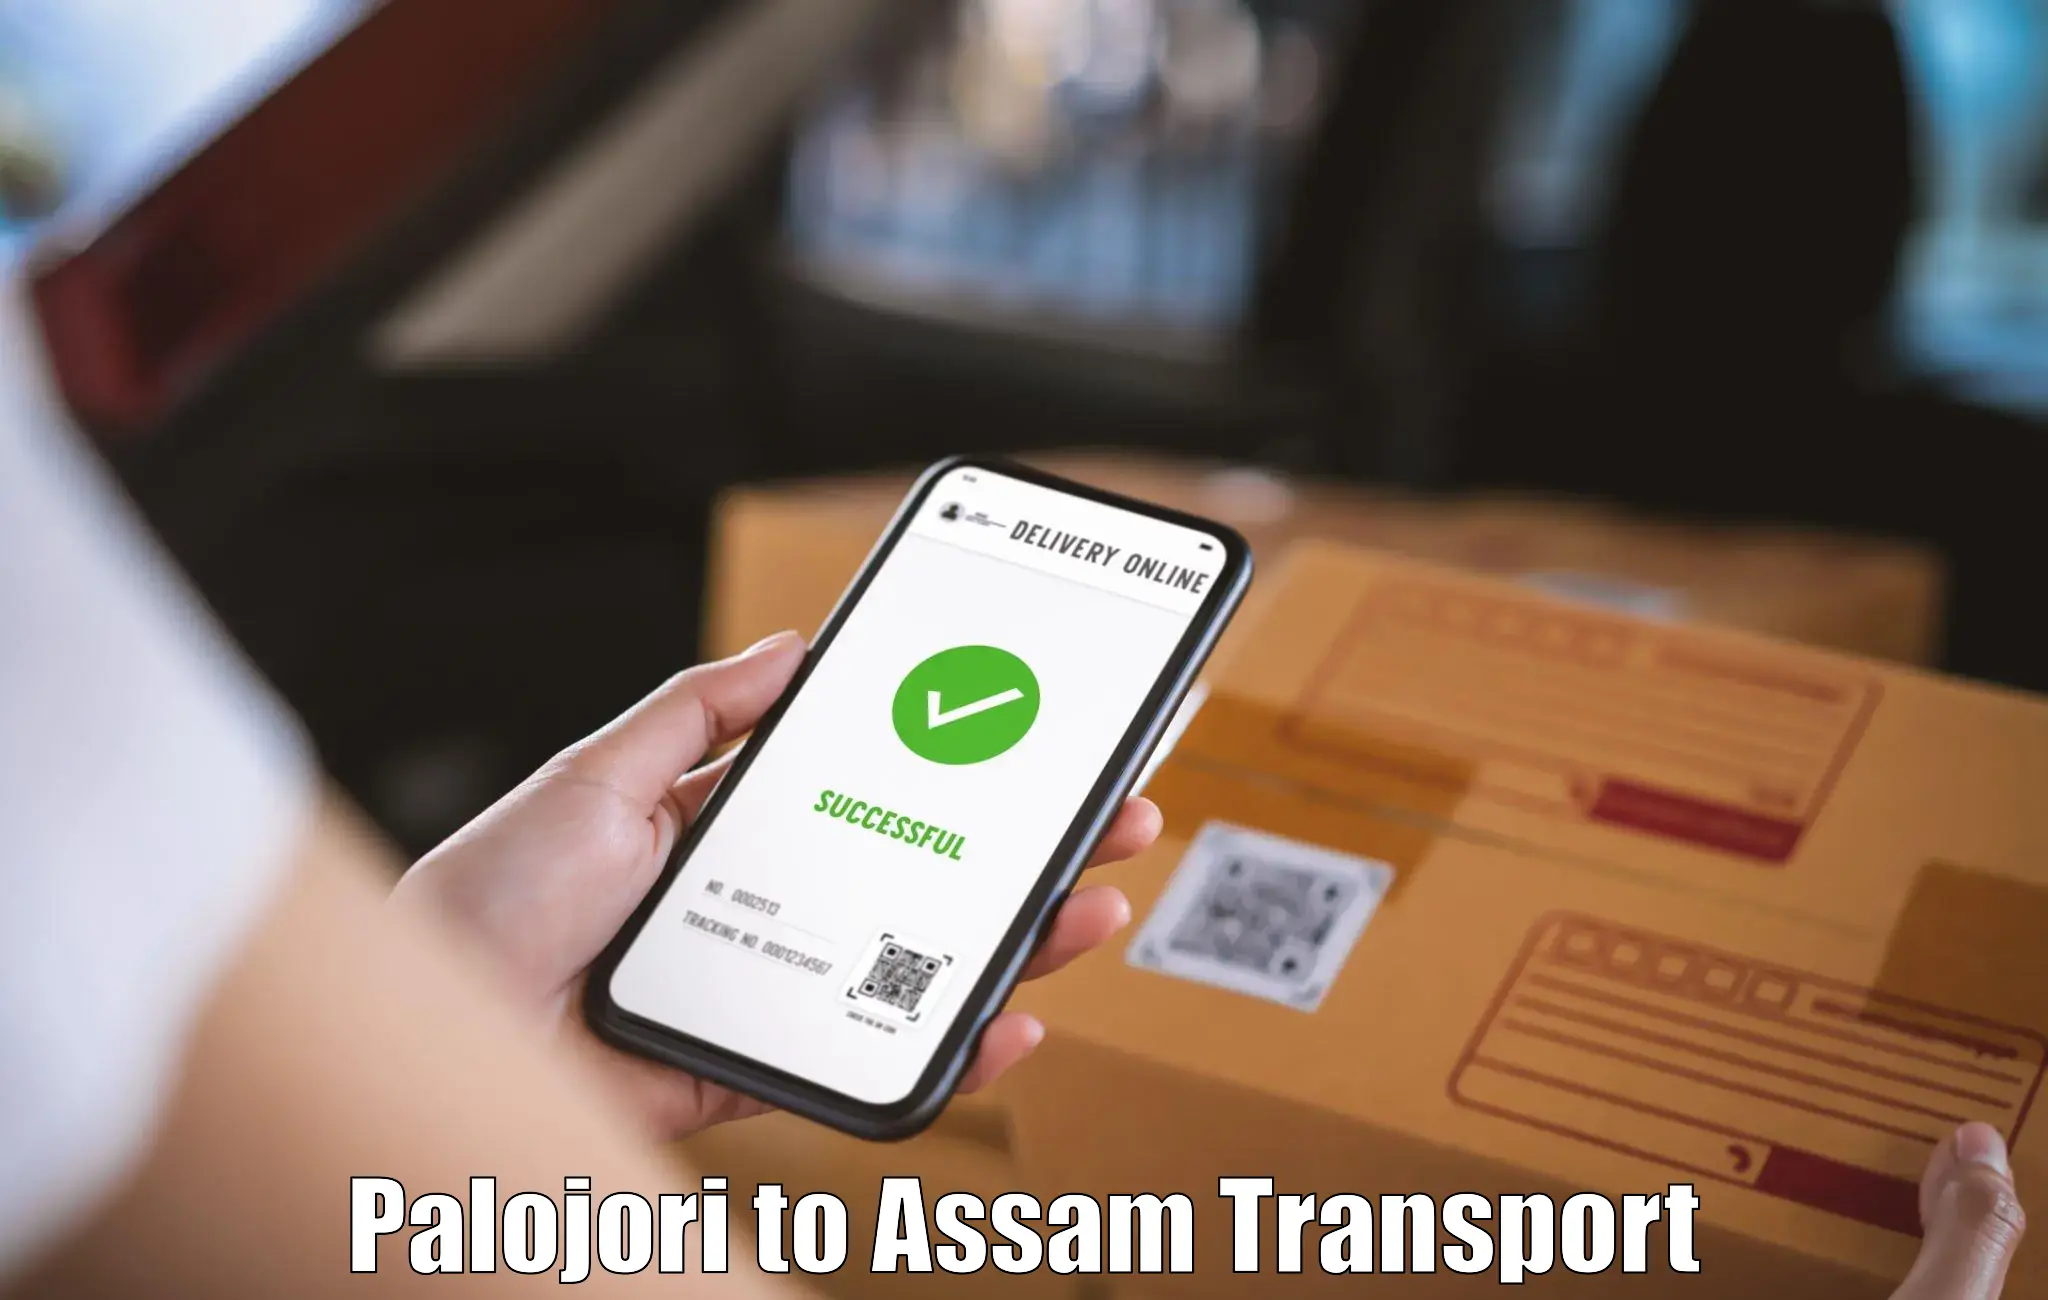 Commercial transport service Palojori to Lala Assam